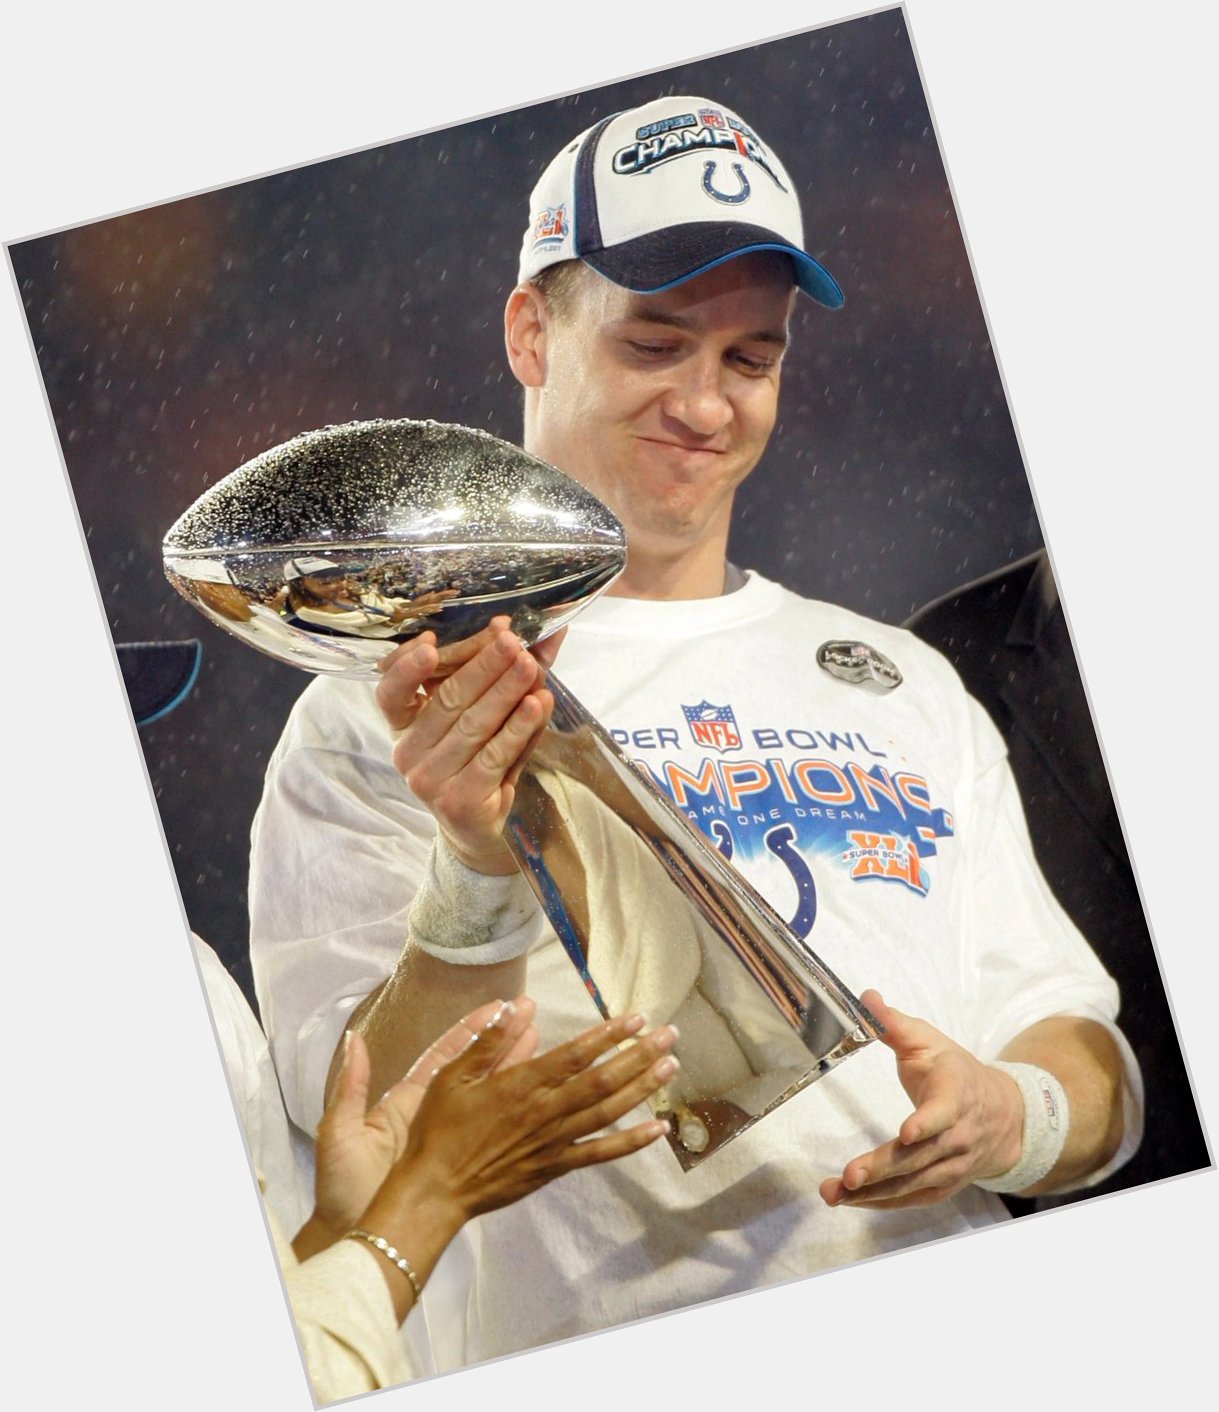 Happy birthday to the legend himself, Peyton Manning! 